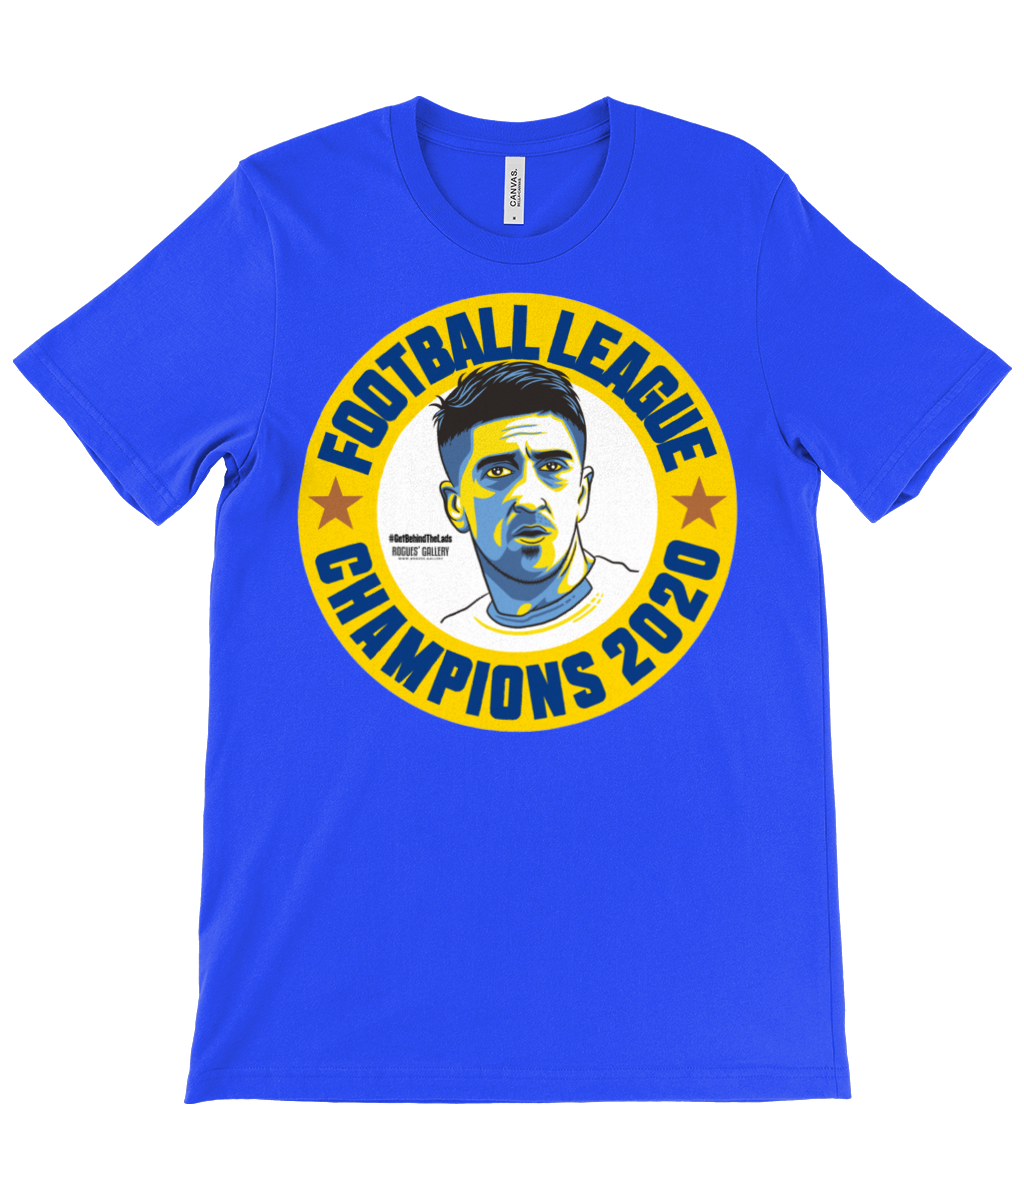 Pablo Hernandez Champions Leeds United 2020 unisex t-shirt blue